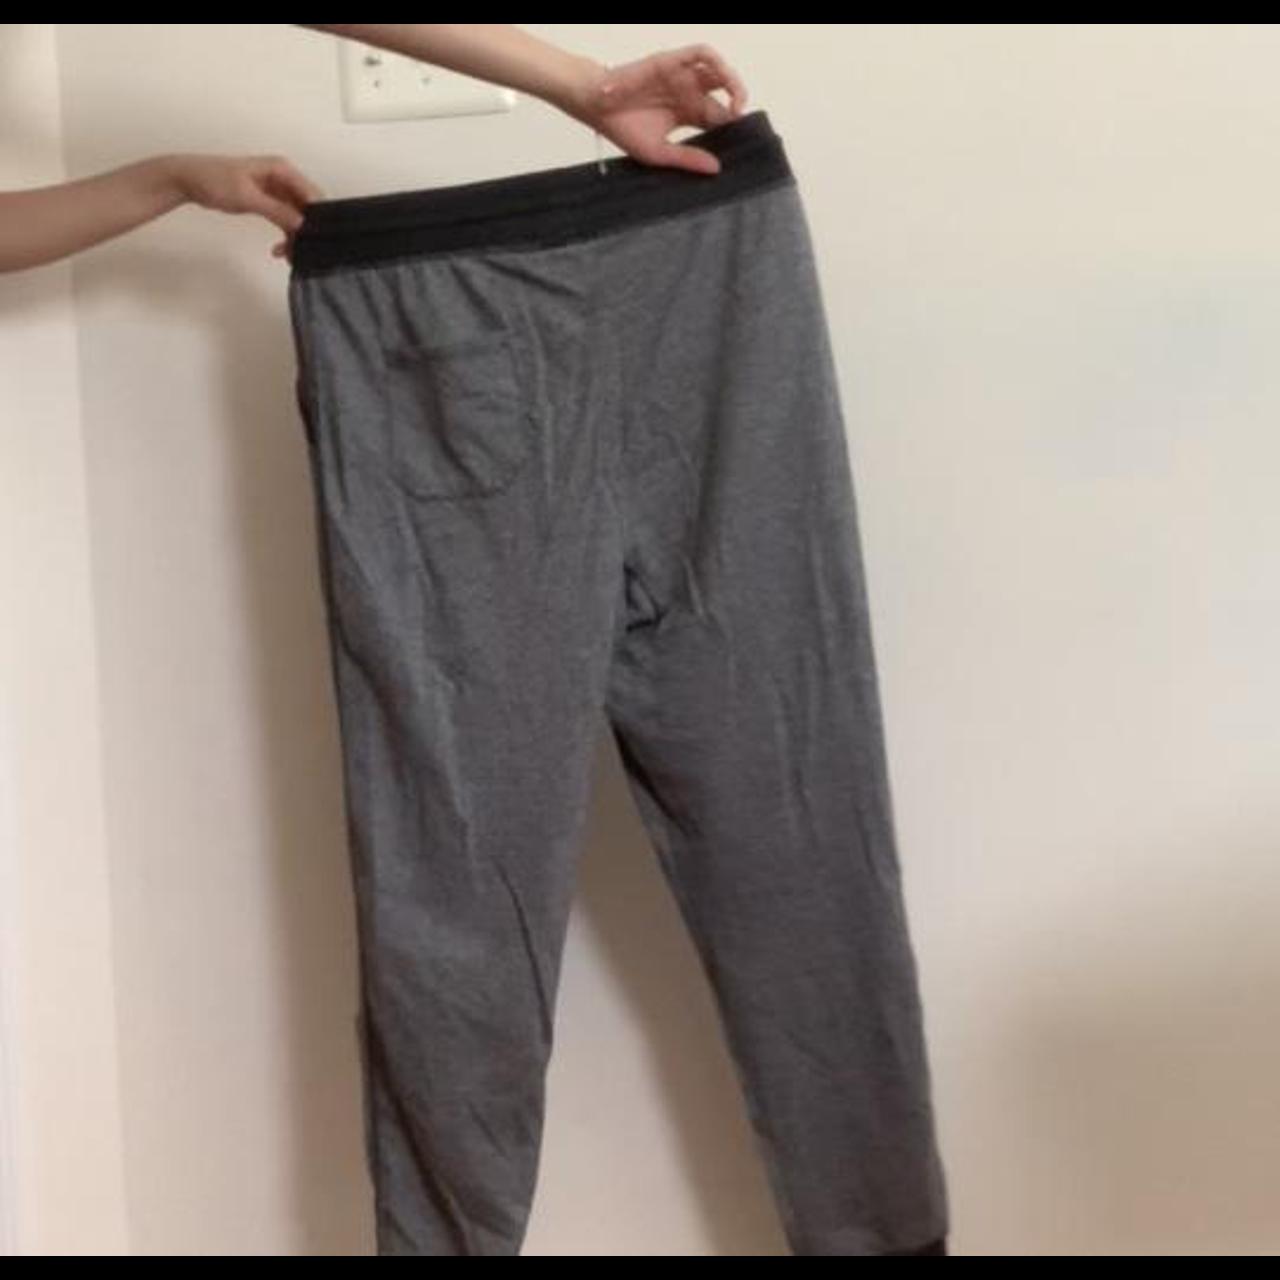 Product Image 2 - Men’s Gray Lounge Joggers
Size L

#menspants#mensjoggers#joggers